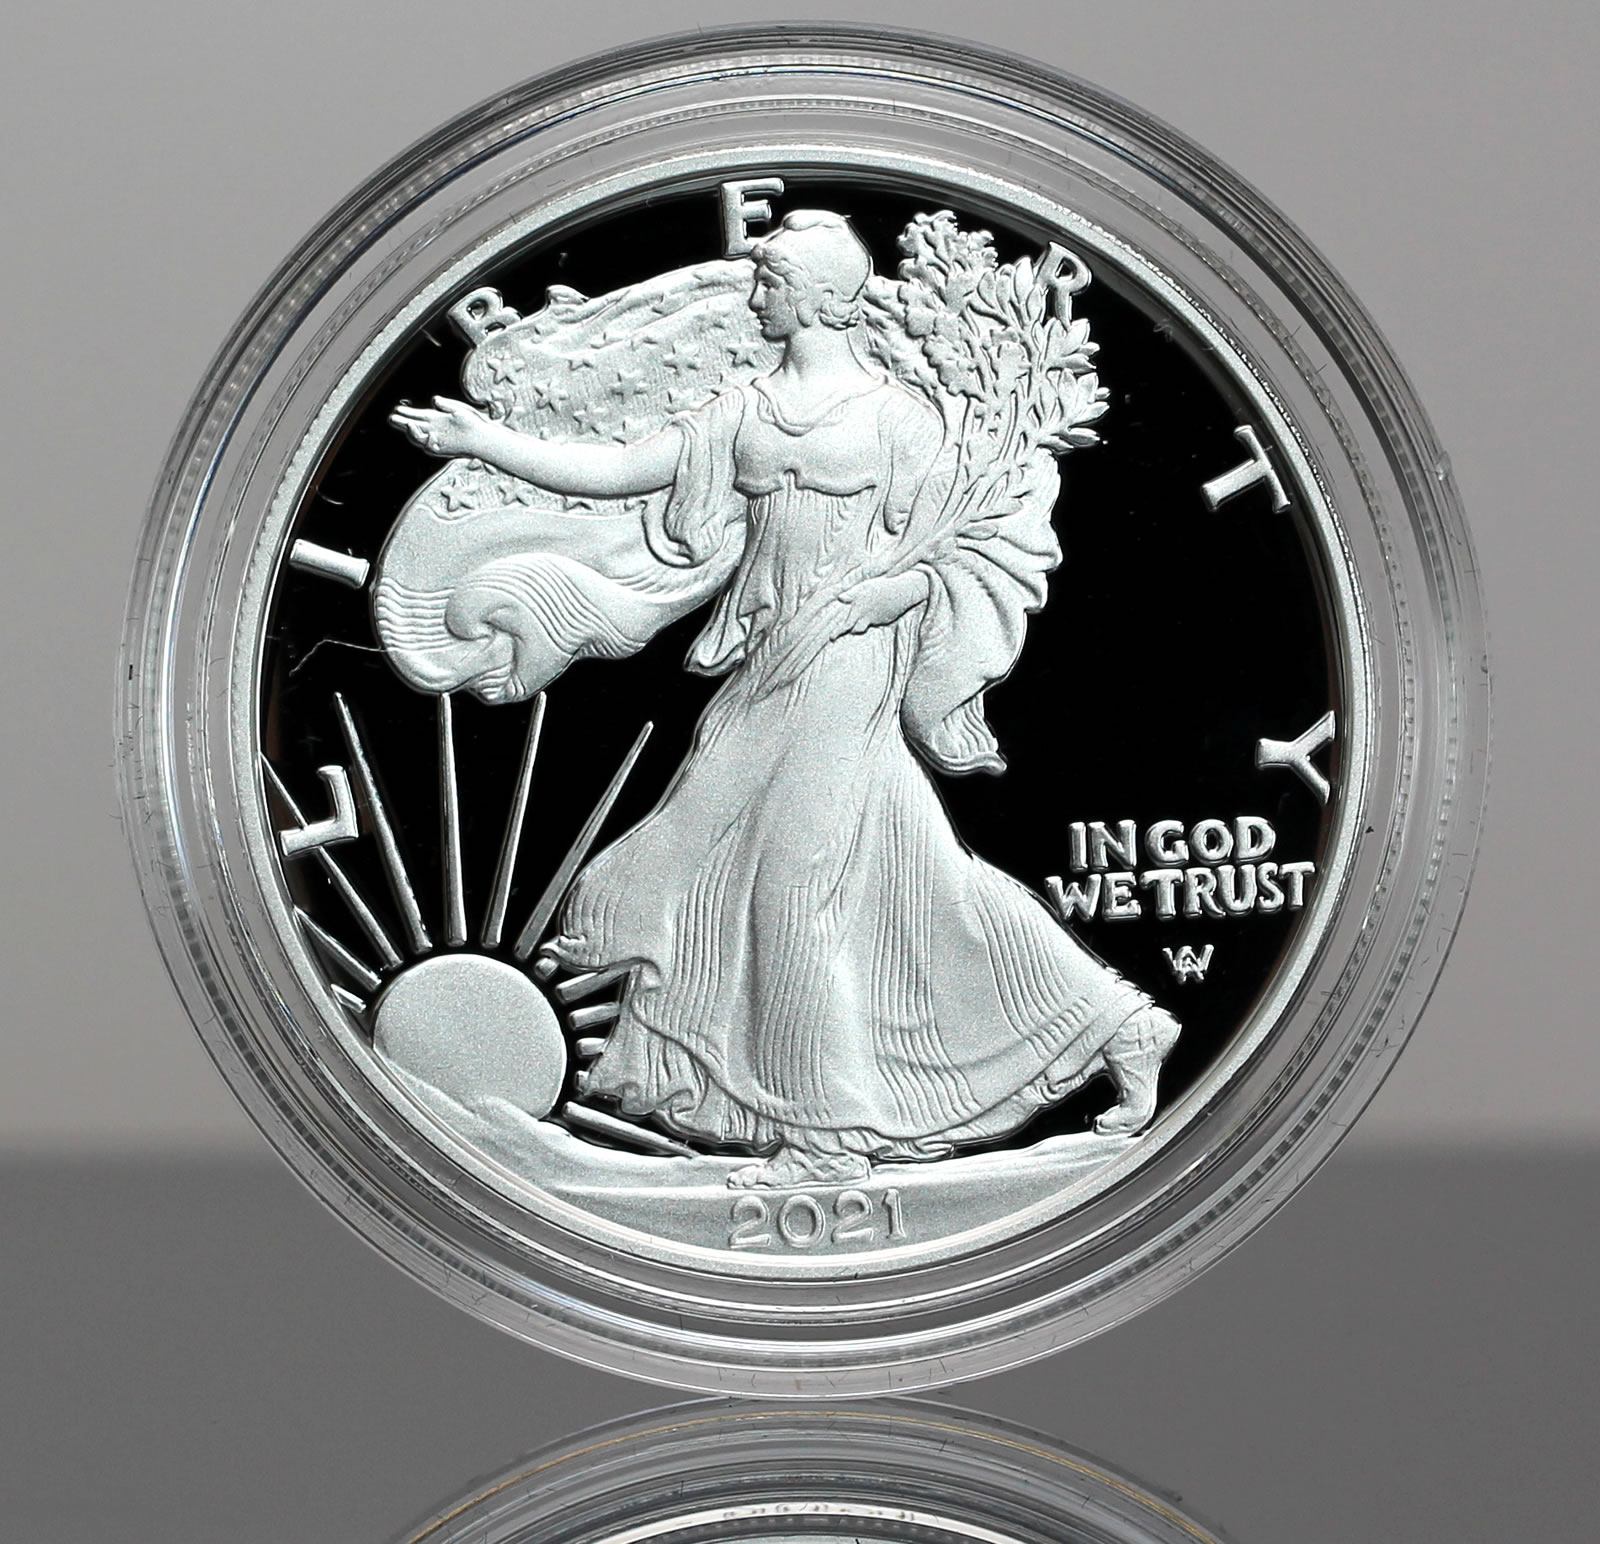 Capital Plastic Case Holder For 2 US Mint Sets Of 5 Coin Cent Half Black Display 